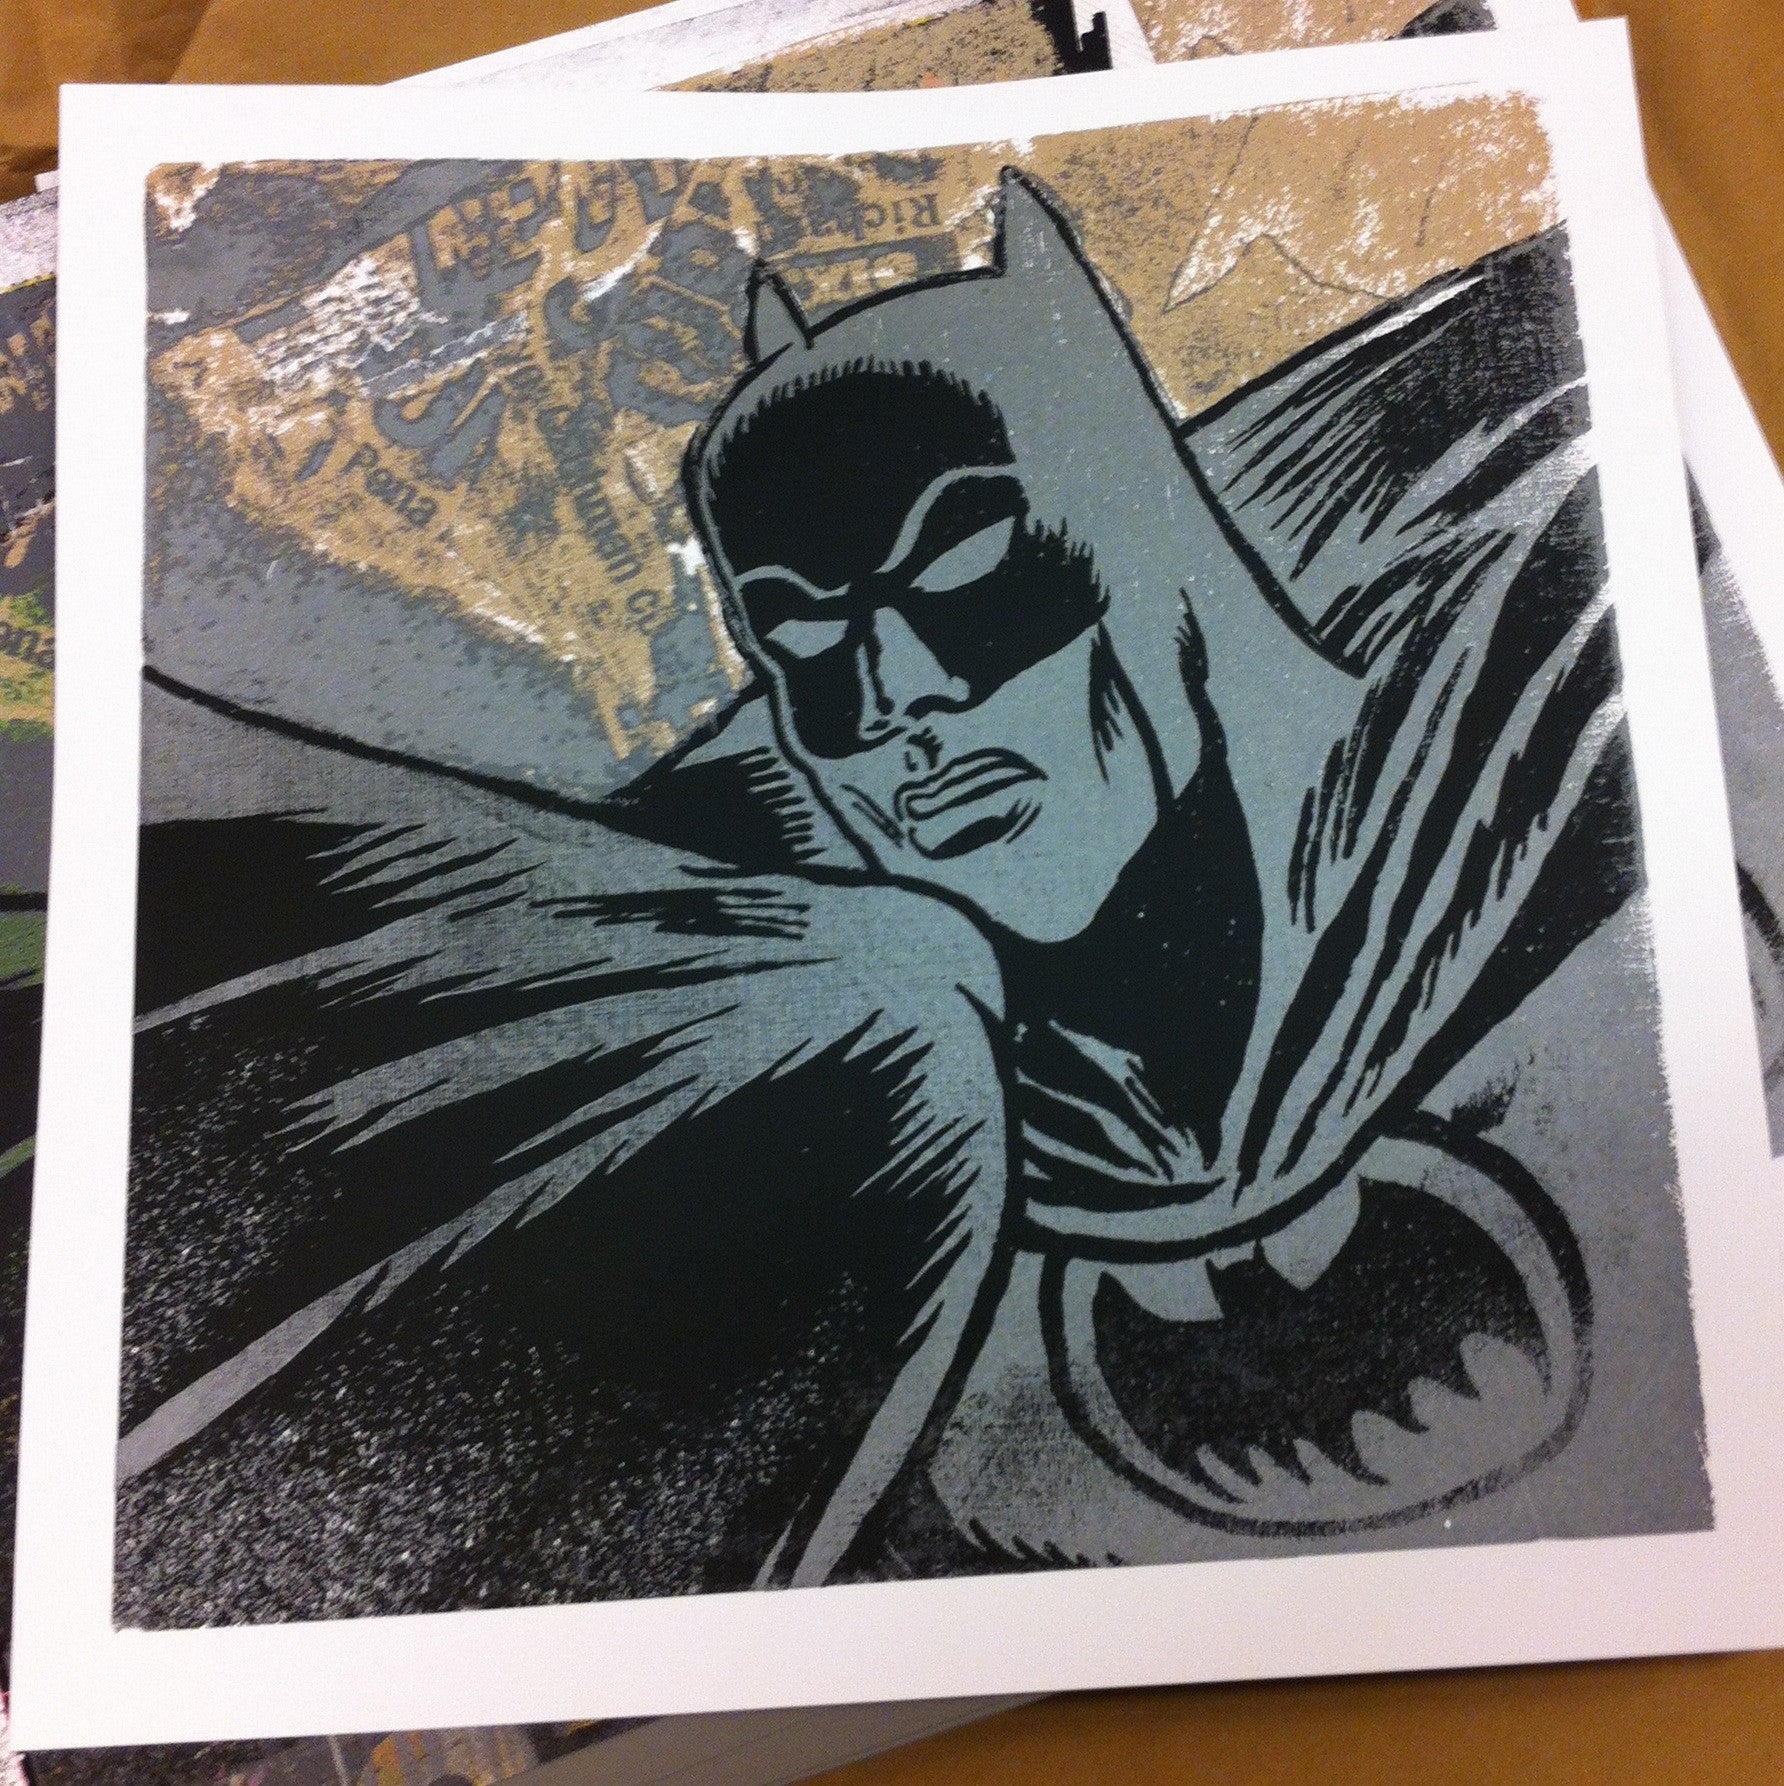 CEY -  "Batman" Print